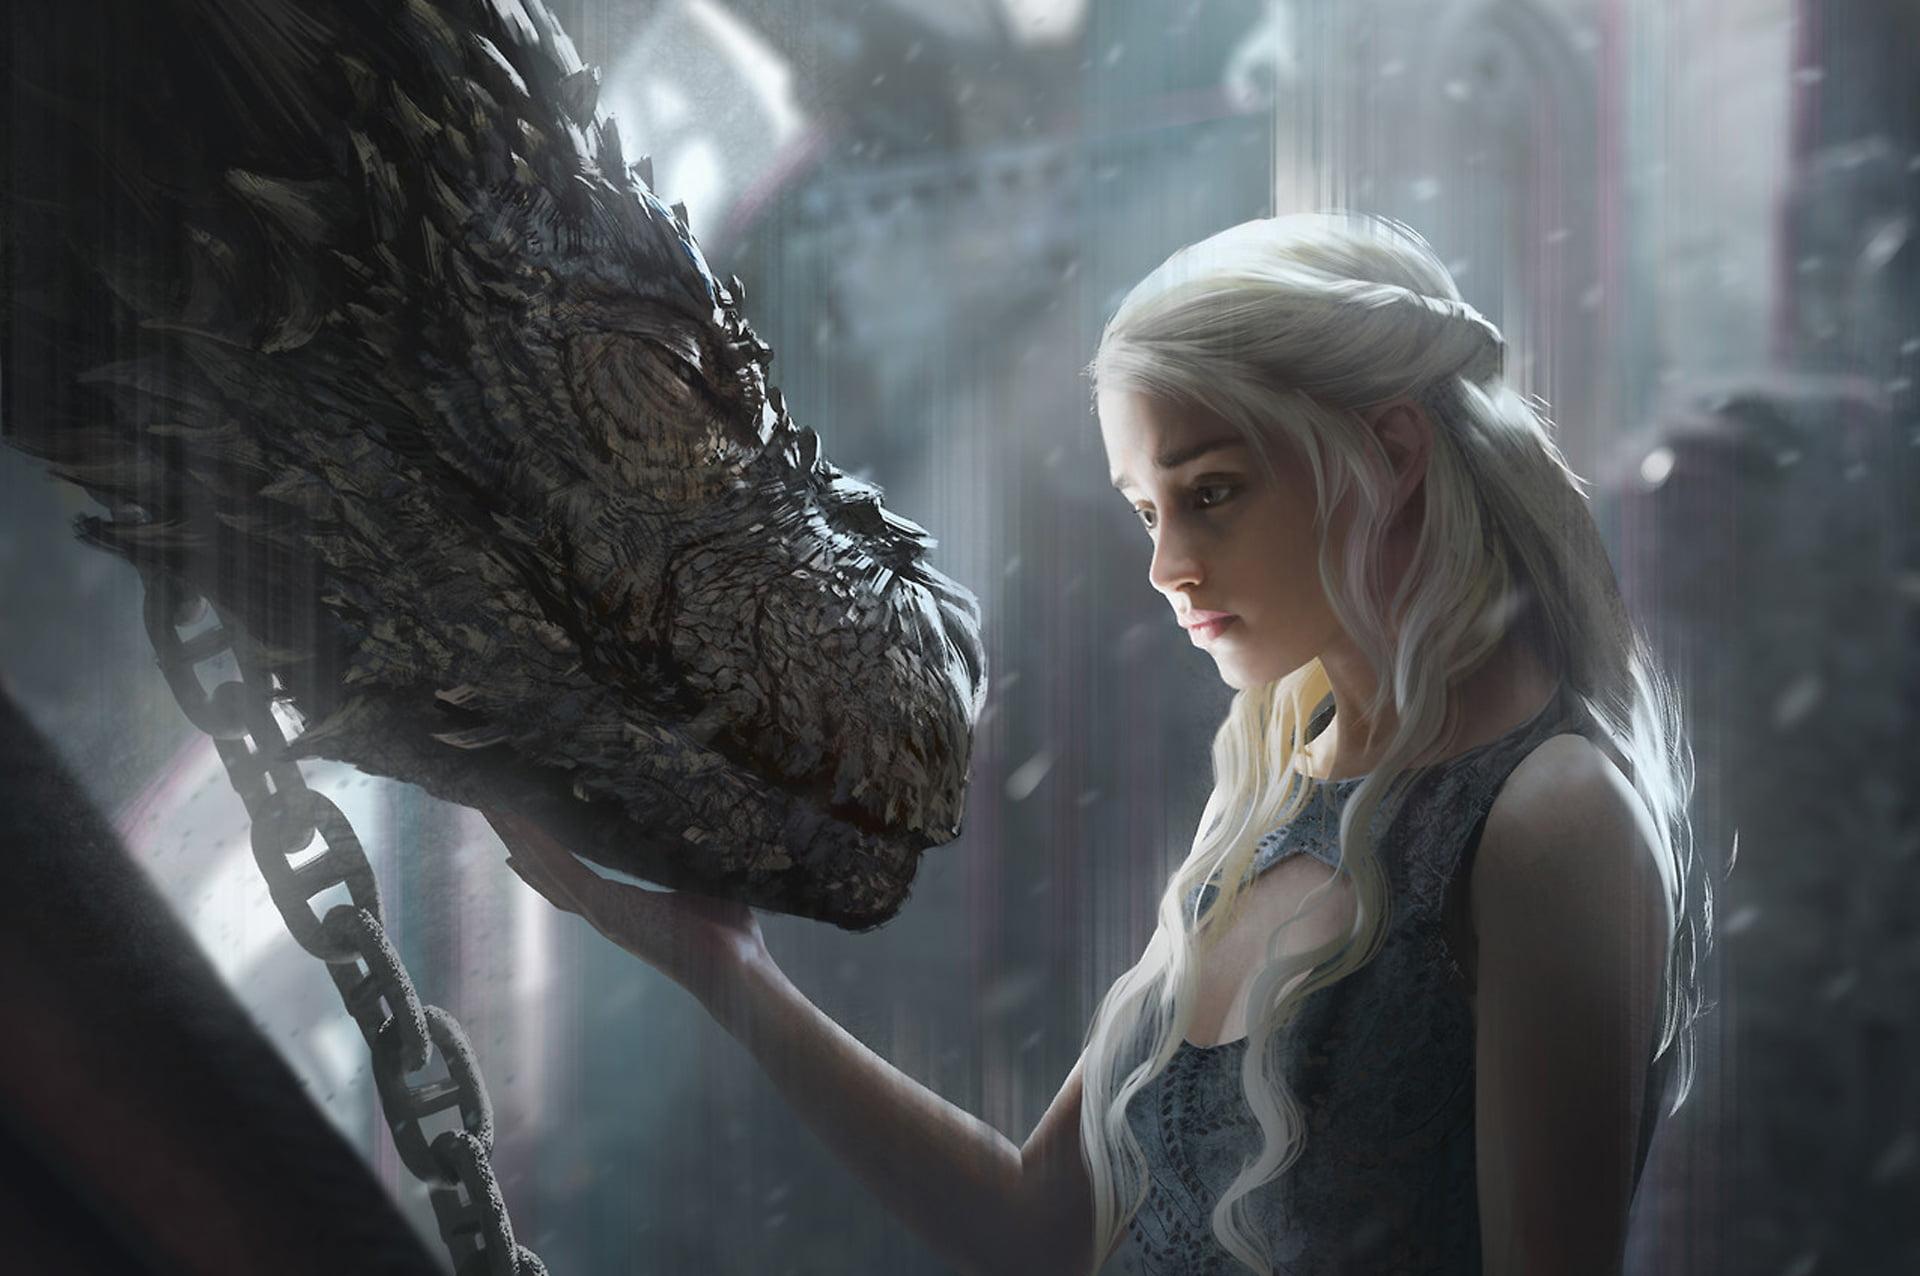 HD wallpaper: Game of Thrones Daenerys Targaryen digital wallpaper